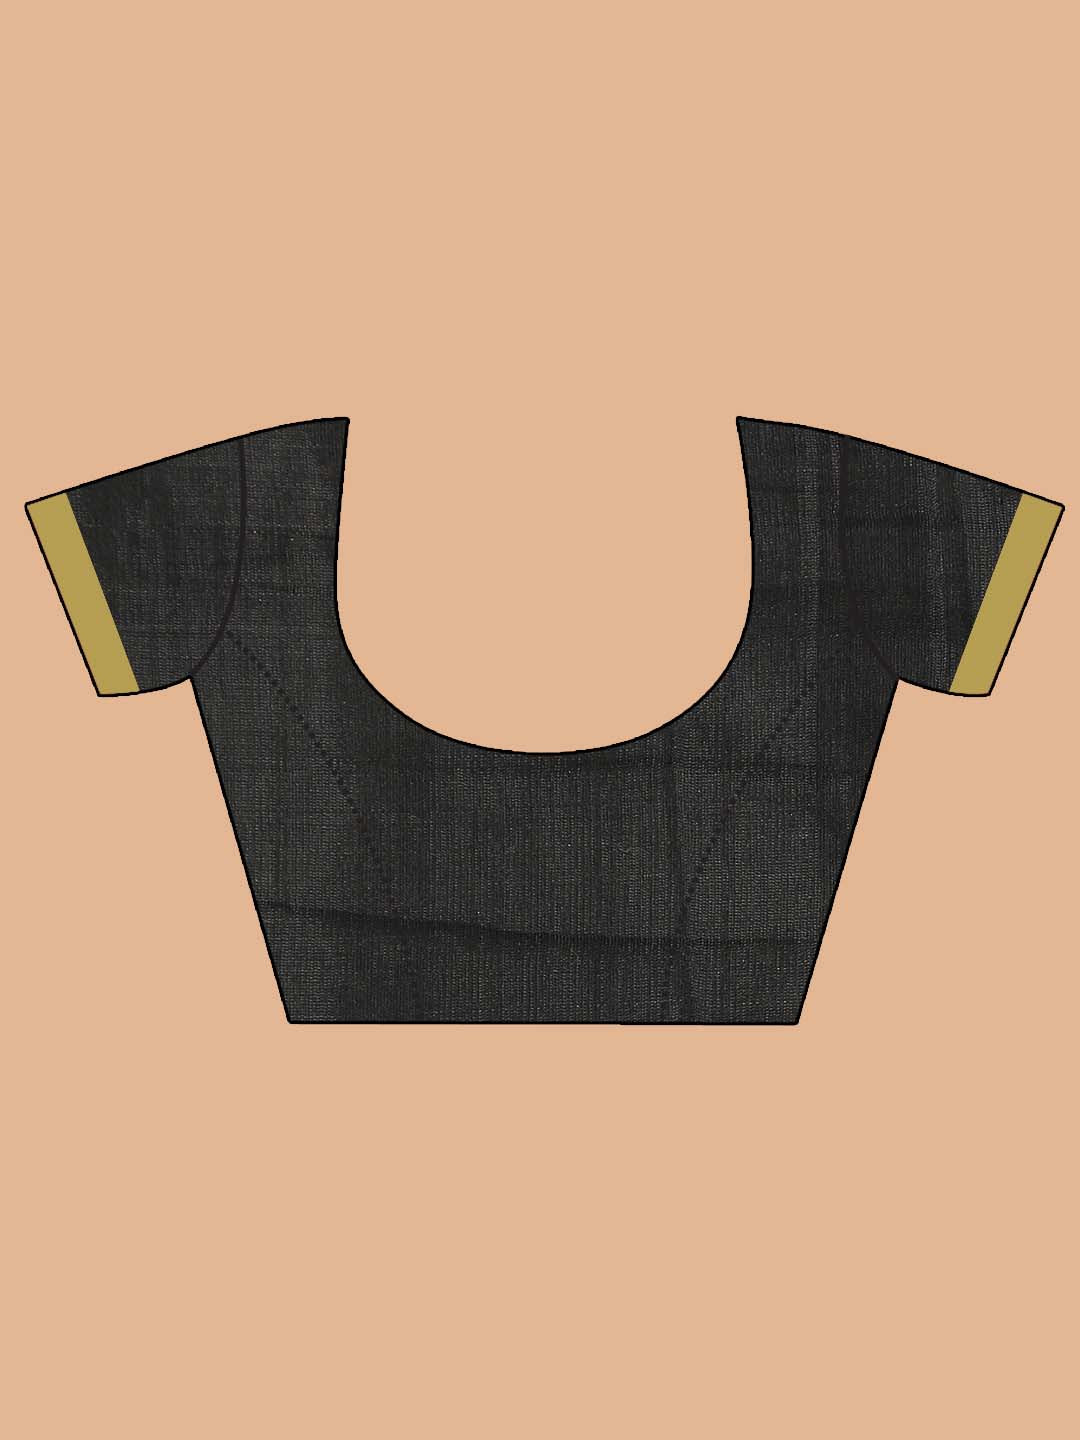 Indethnic Black Bengal Handloom Cotton Blend Work Saree - Blouse Piece View